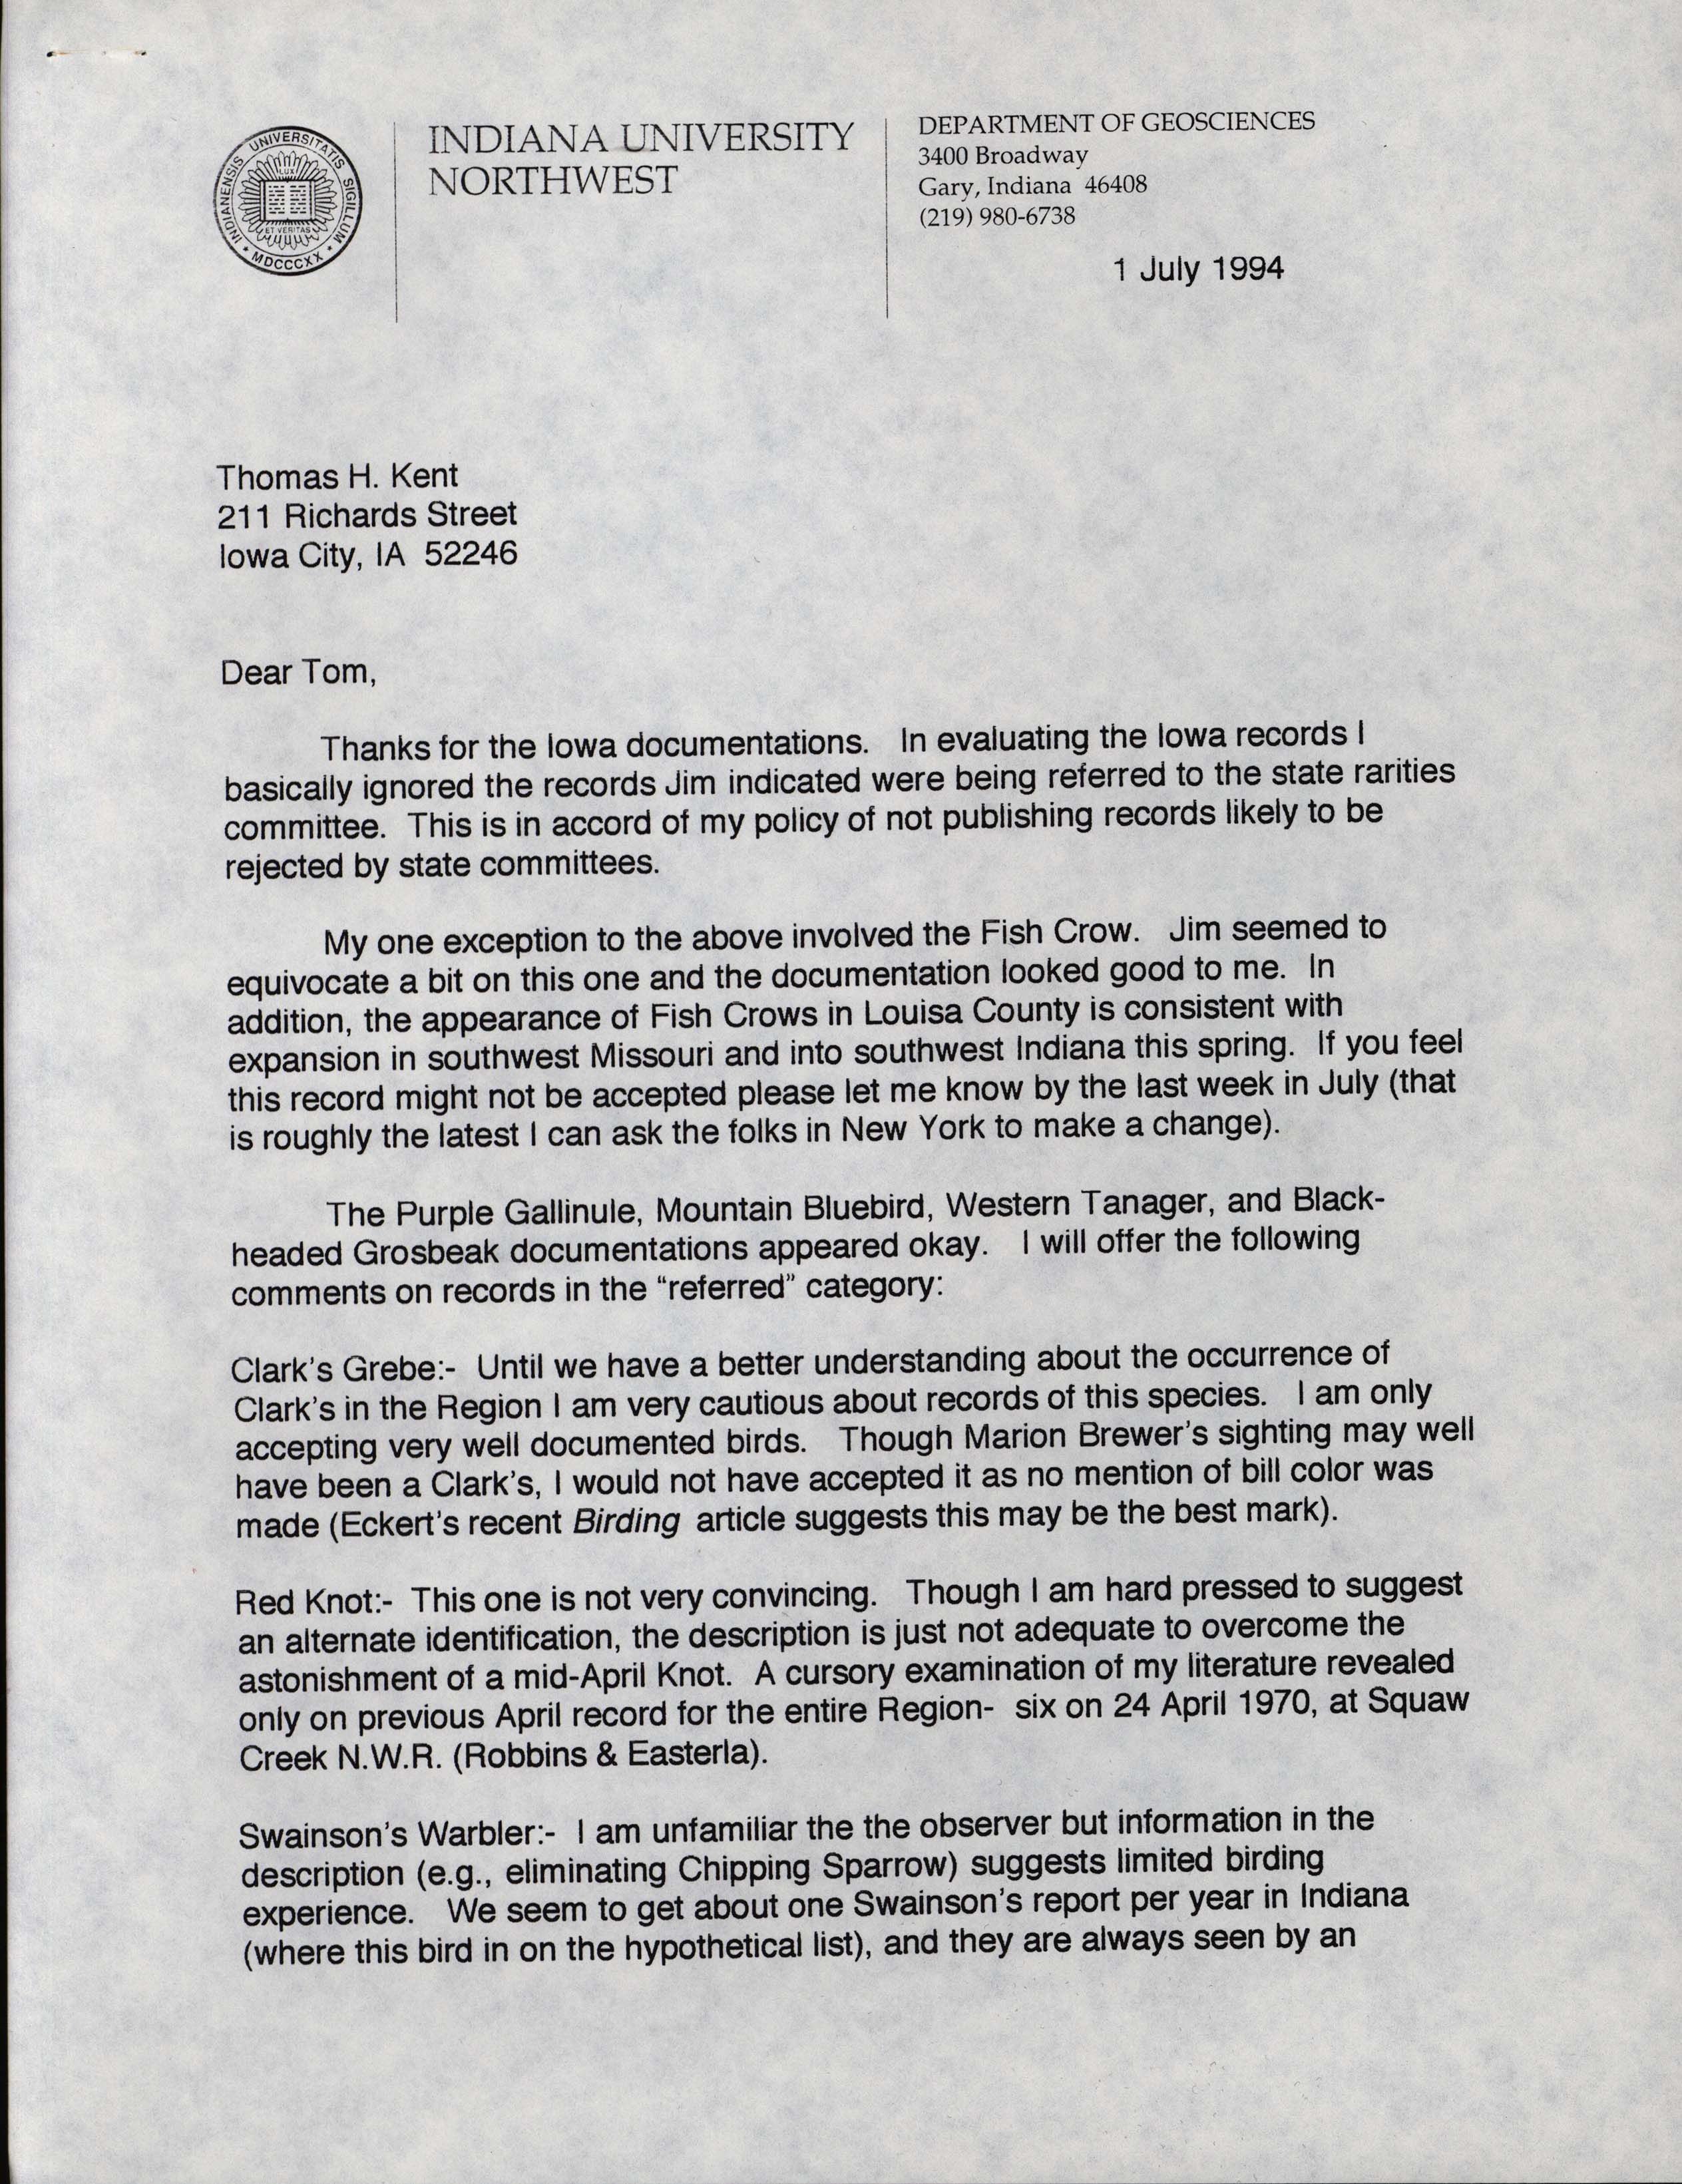 Kenneth Brock letter to Thomas Kent regarding Iowa records, July 1, 1994